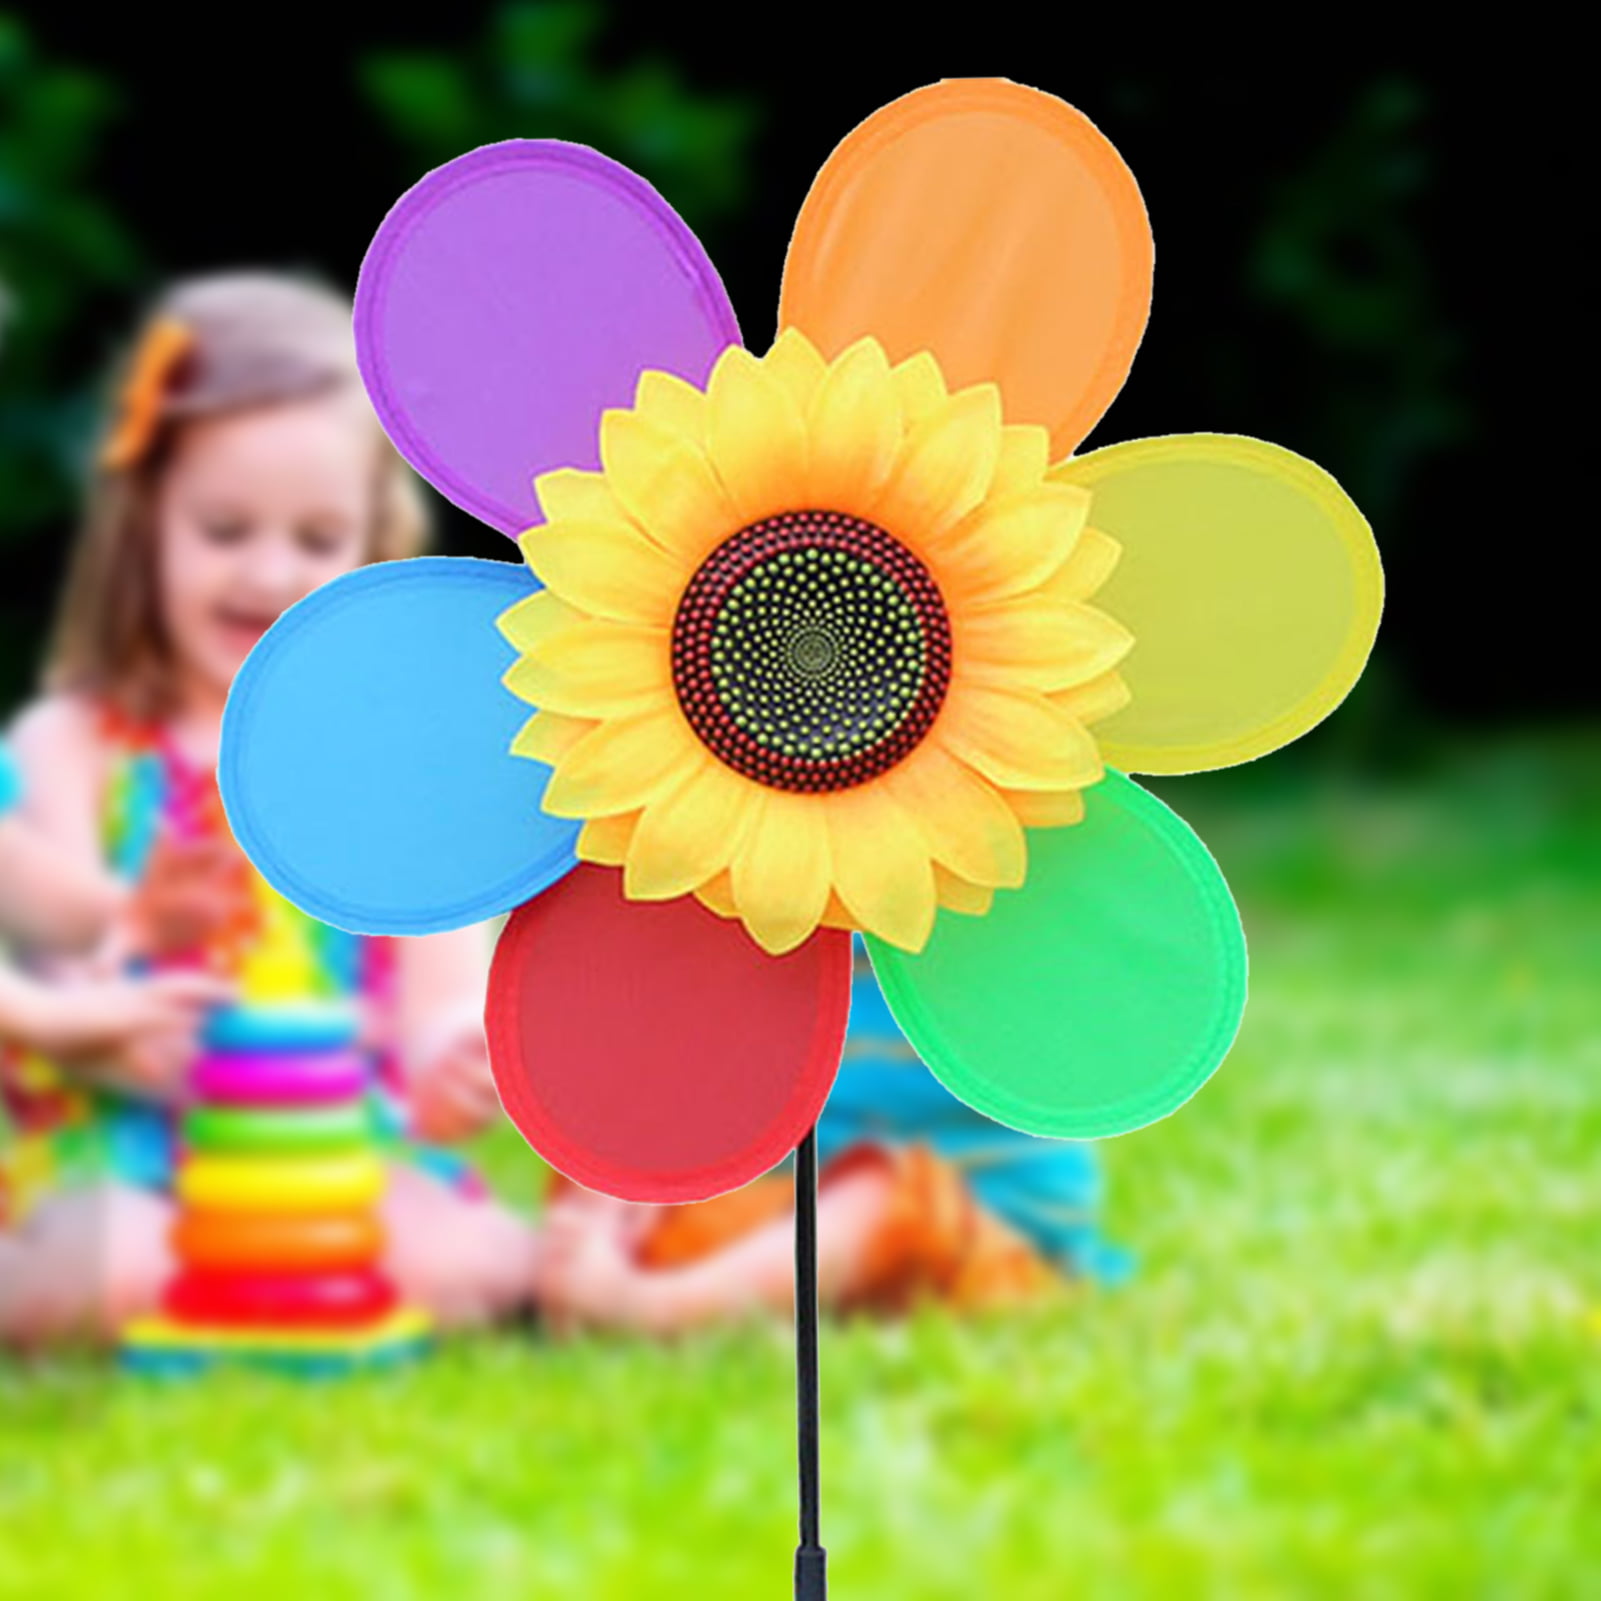 Smile Sunflower Windmill Wind Spinner Wood Handle Kids Toy Lawn Garden Yard Deco 